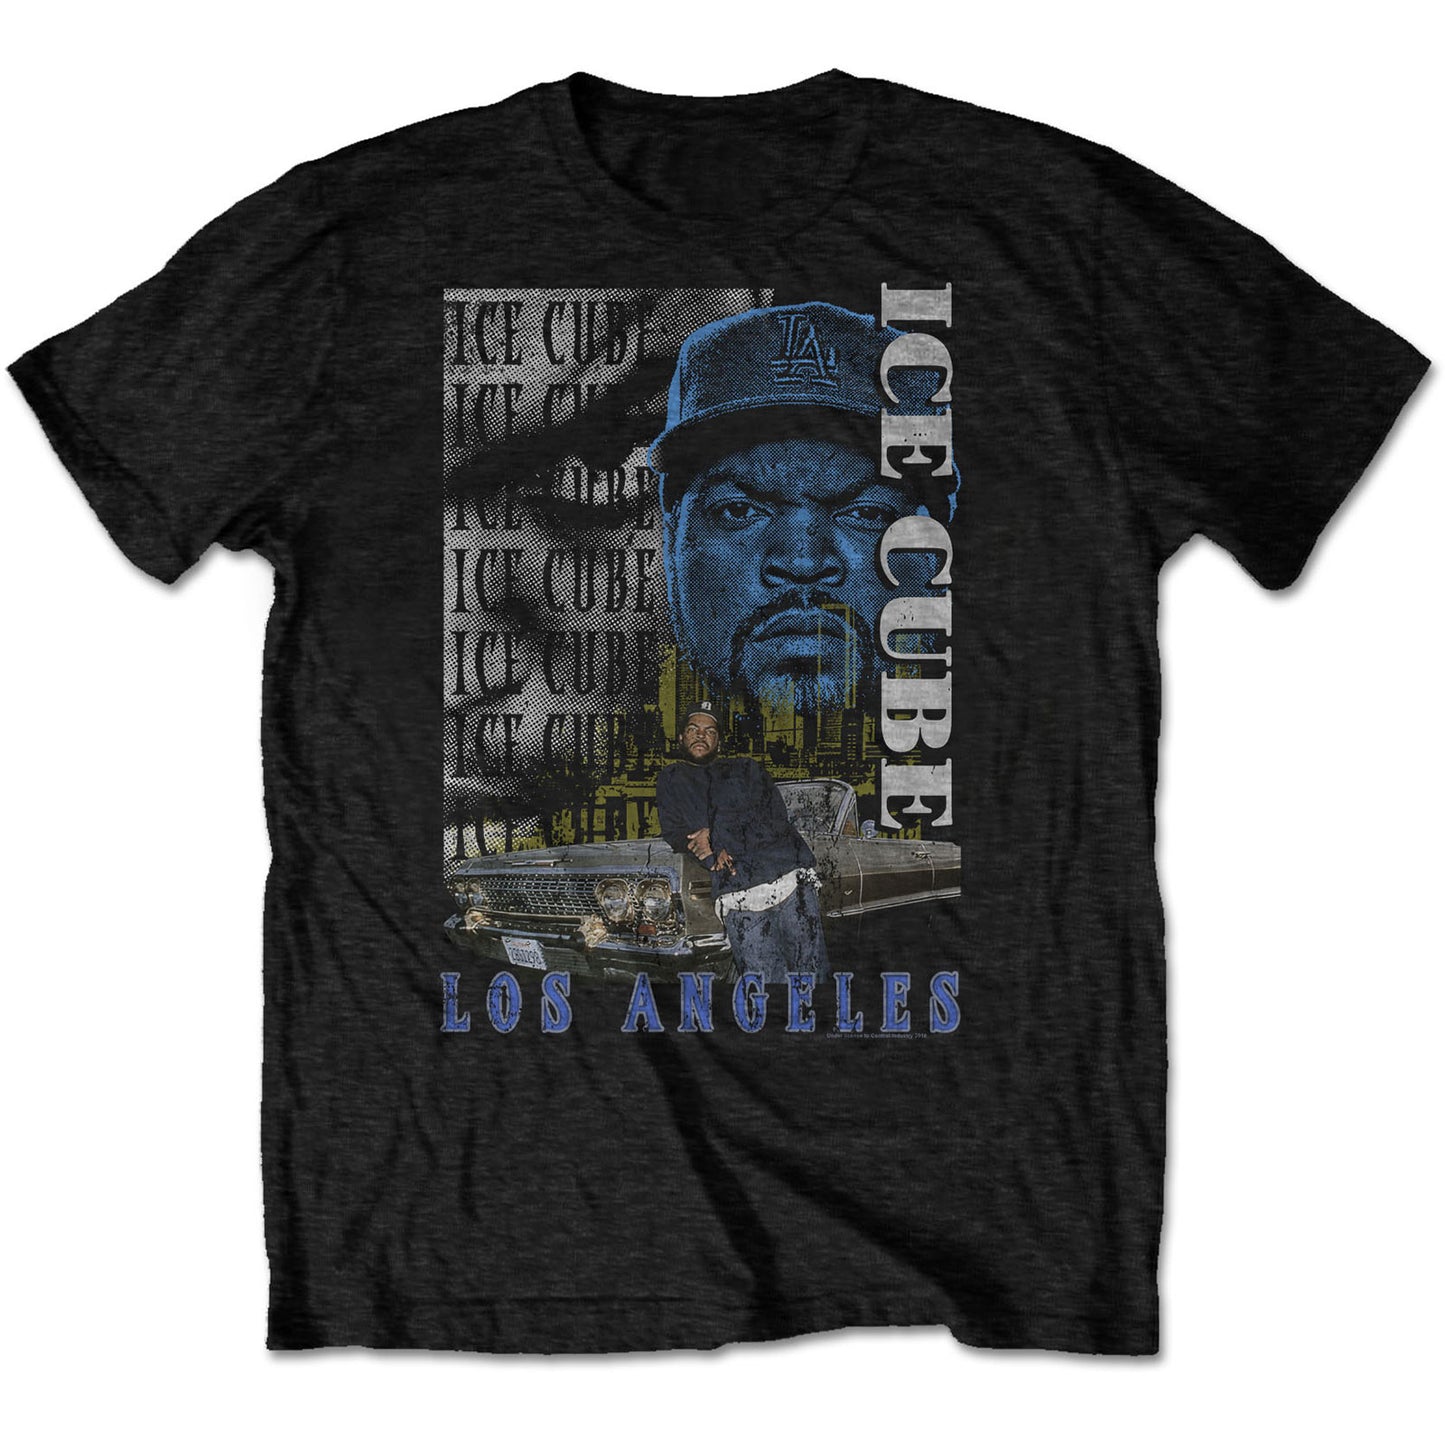 Ice Cube T-Shirt: Los Angeles